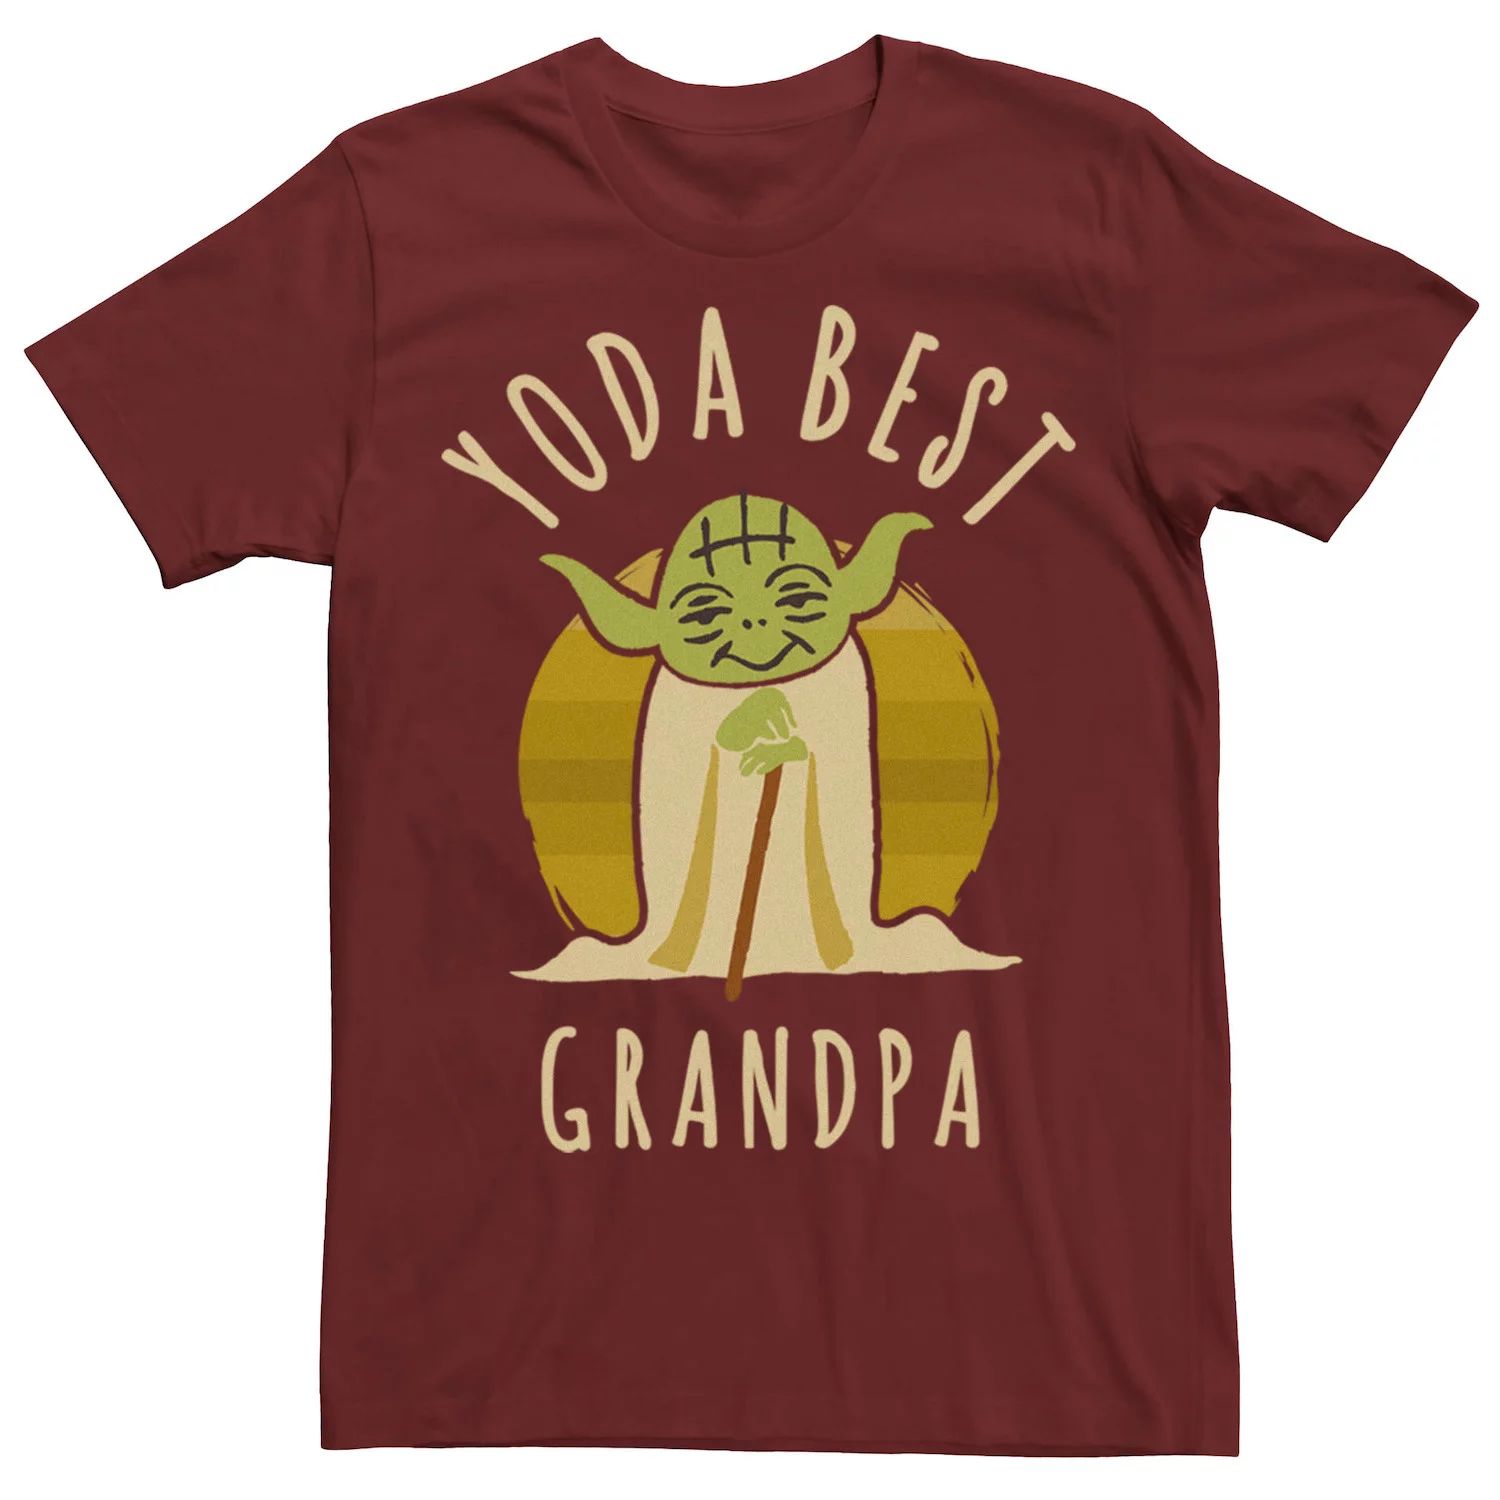 цена Мужская футболка Yoda Best Grandpa с рисунком Йоды Star Wars